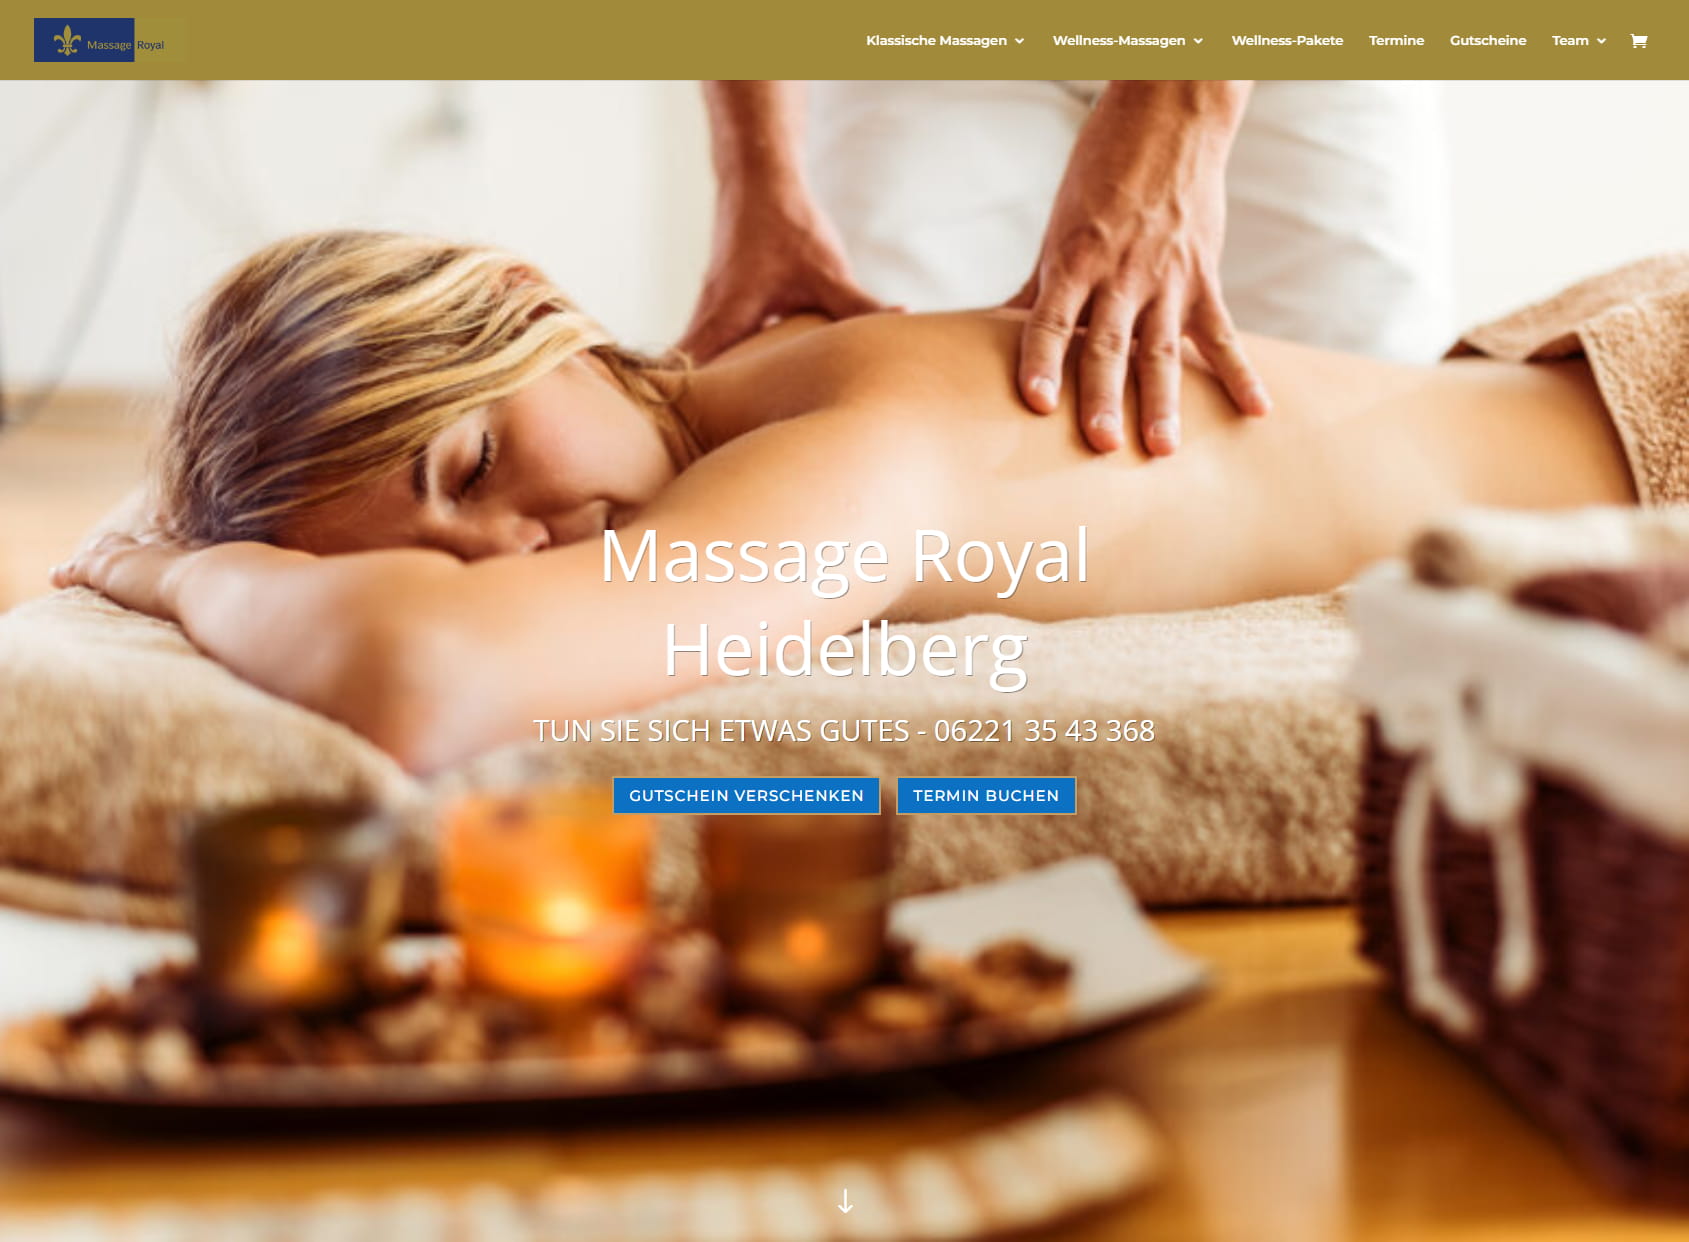 Massage Royal Heidelberg